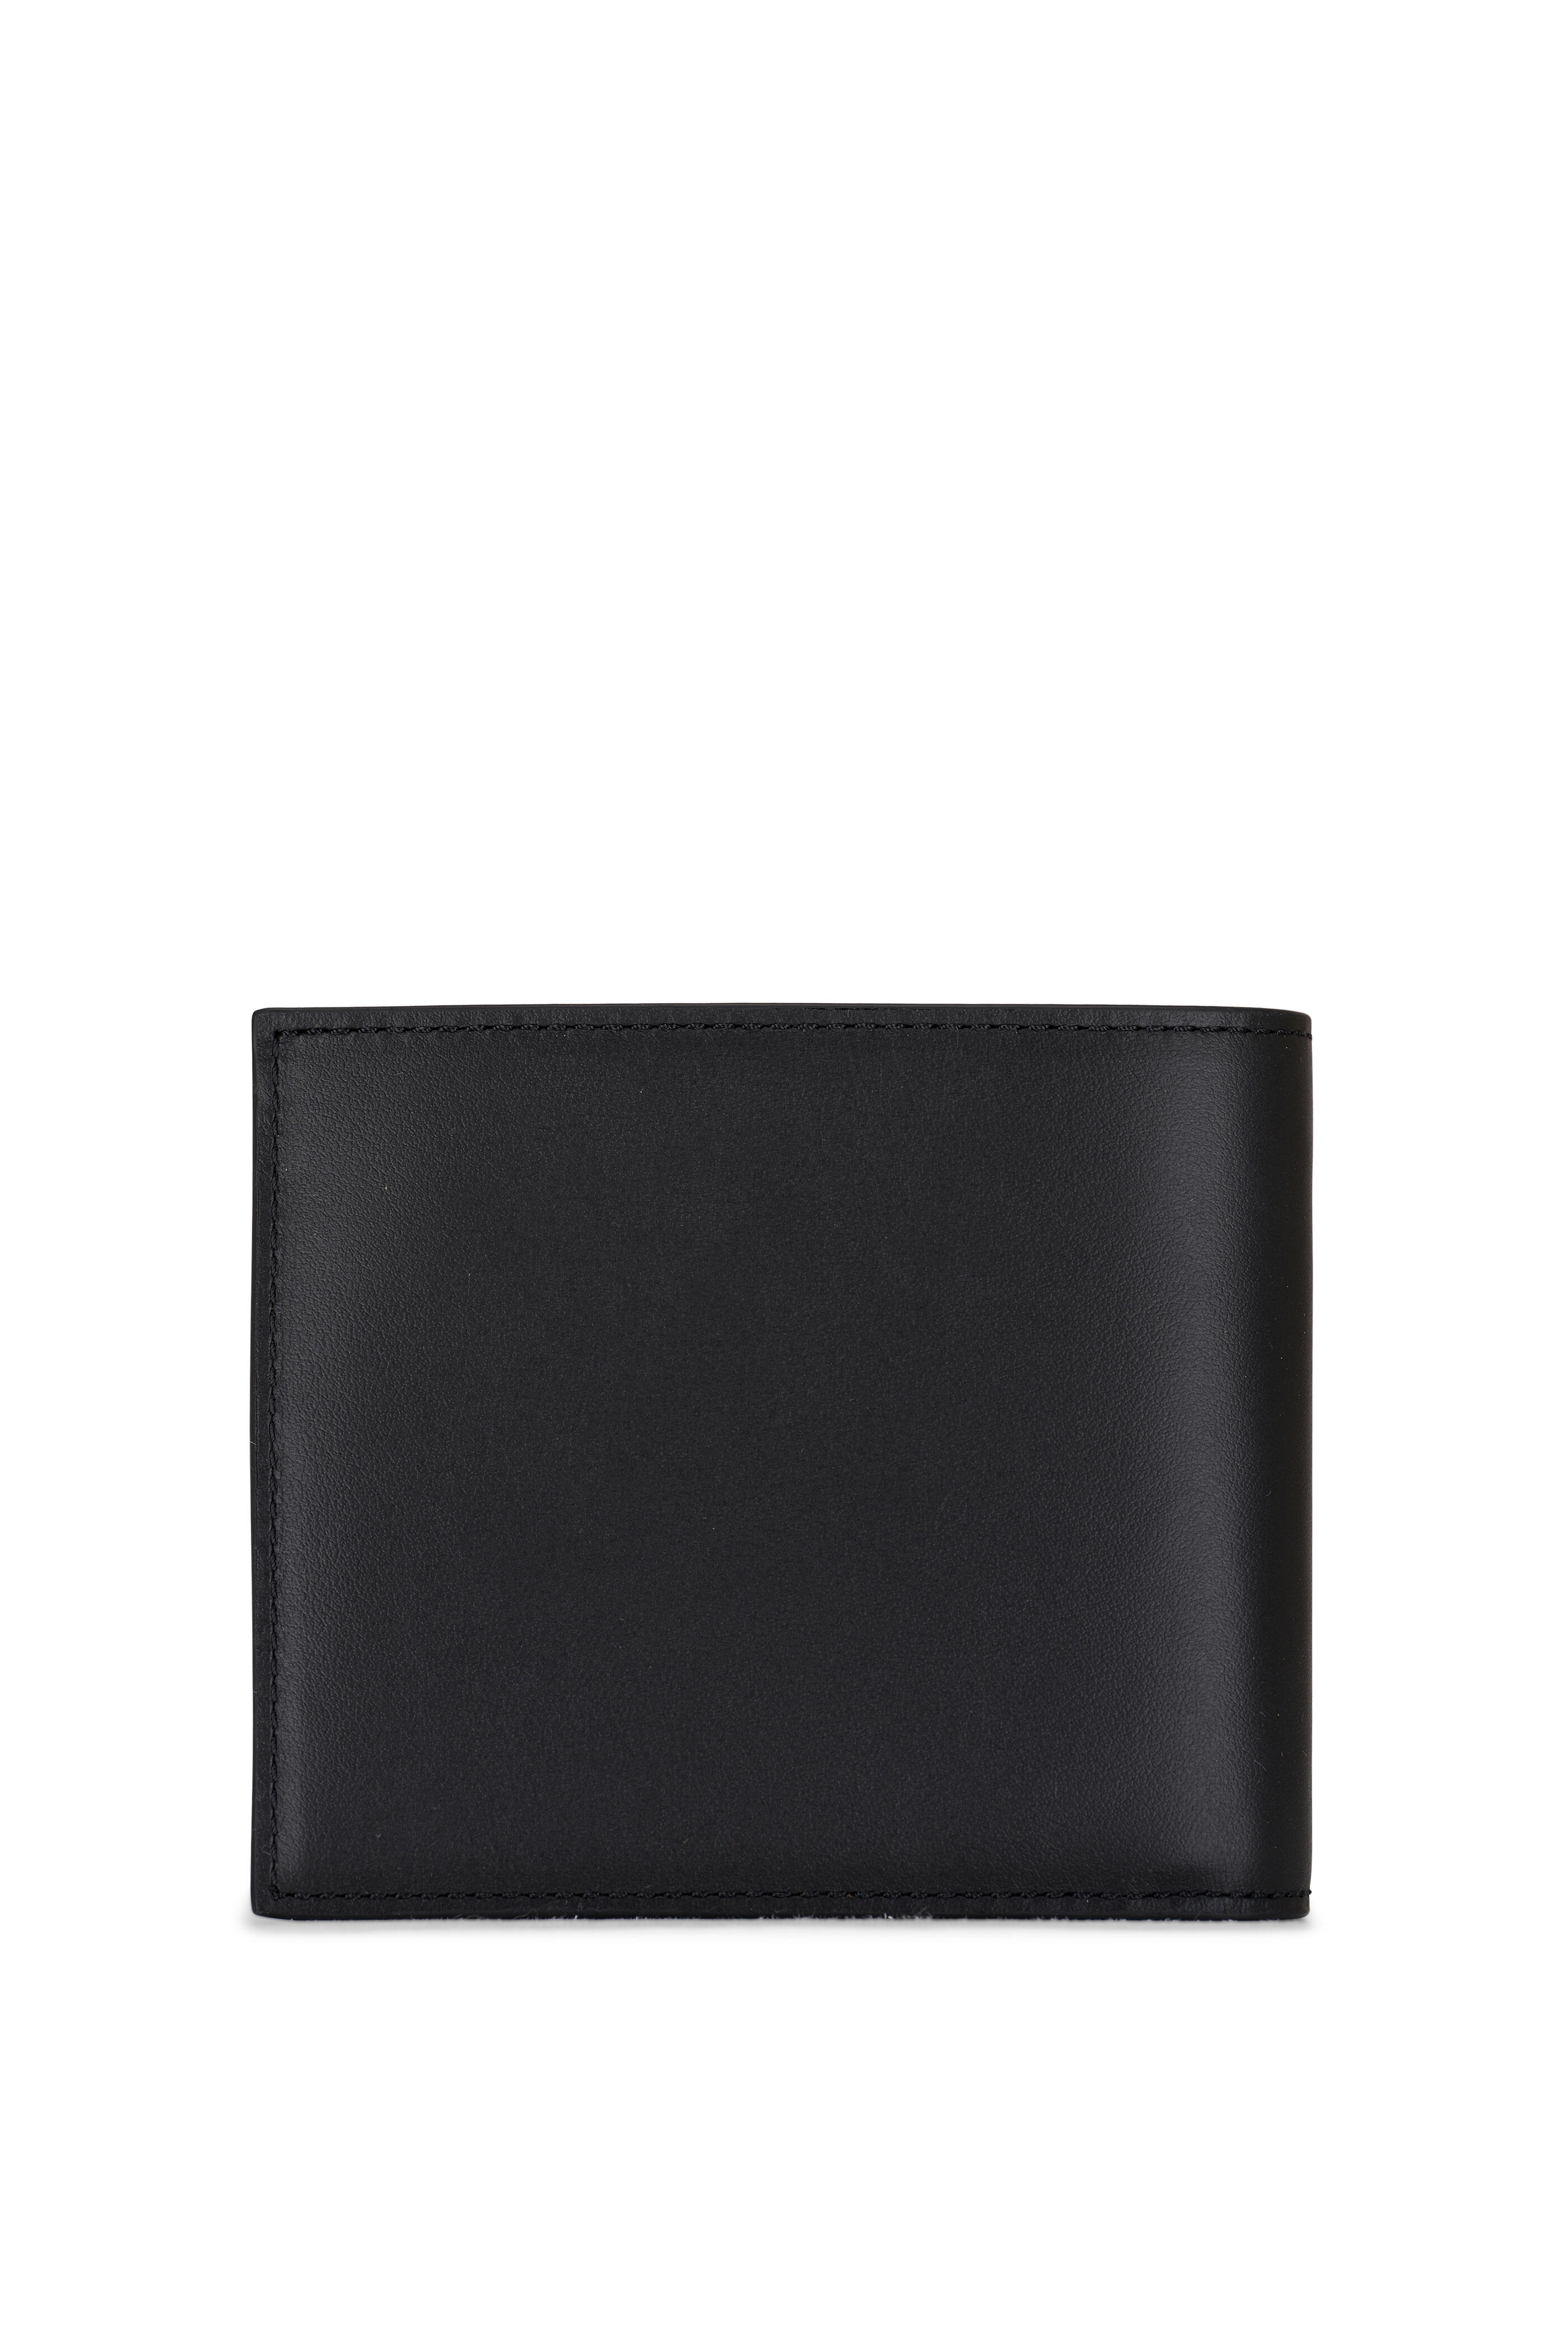 Paul Smith - Black & Multicolor Stripe Bi-Fold Wallet